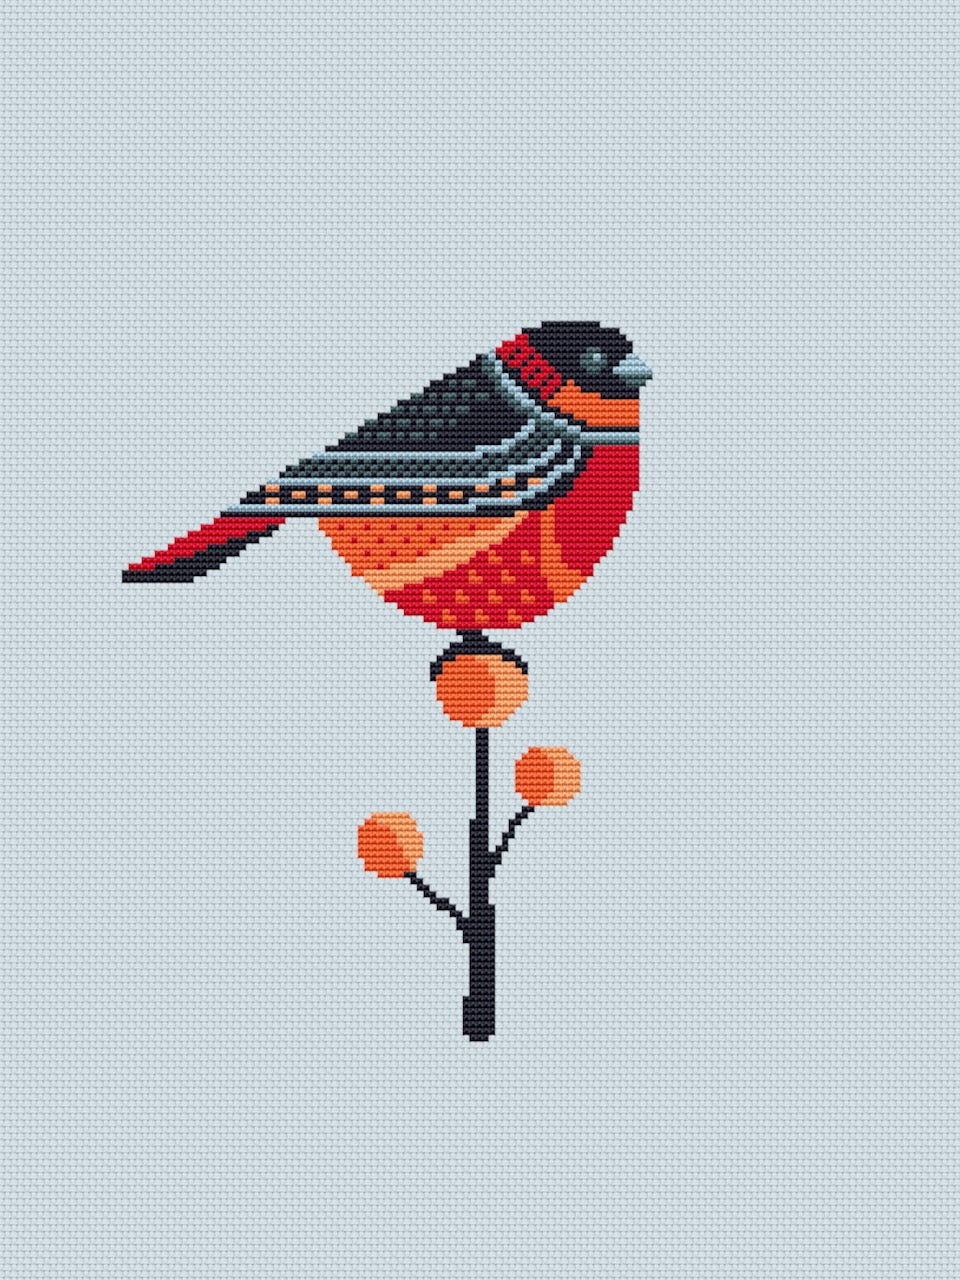 red bird cross stitch pattern